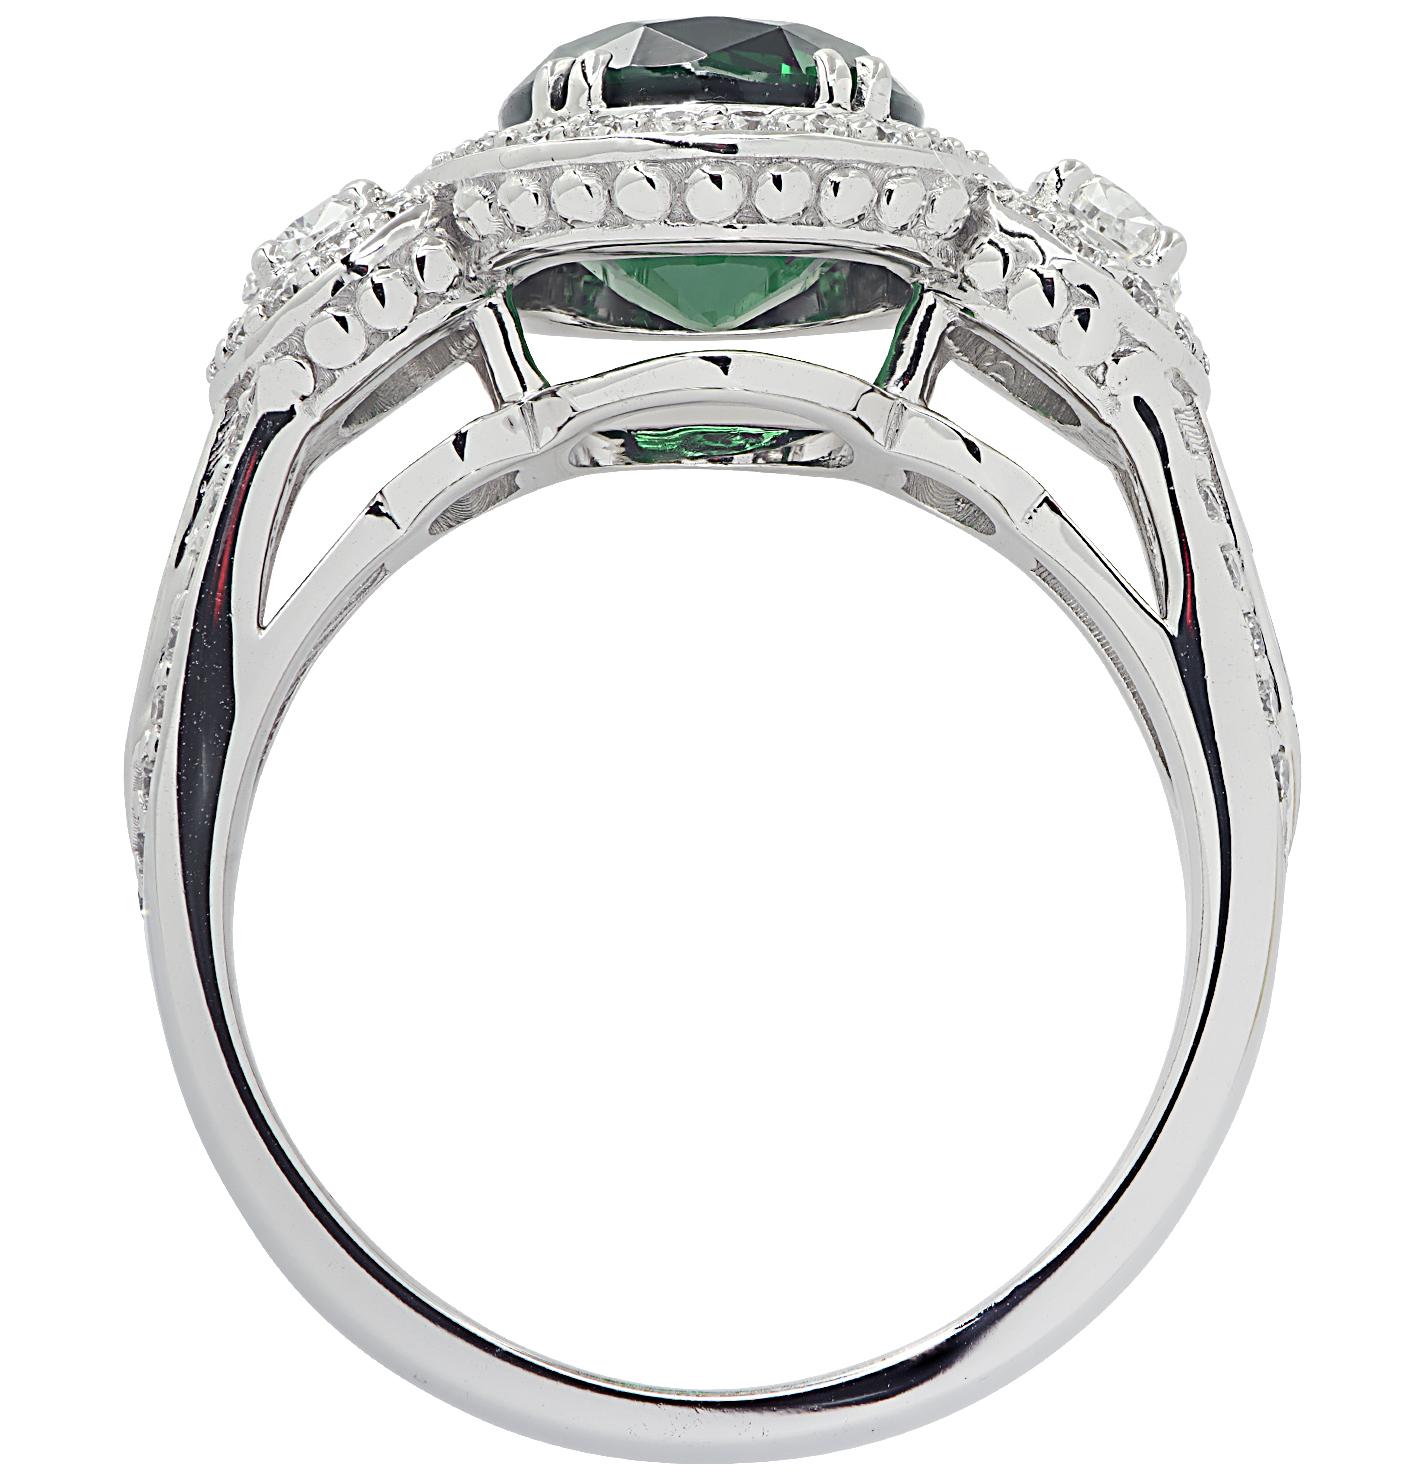 Oval Cut Vivid Diamonds 3.38 Carat Tsavorite and Diamond Ring For Sale